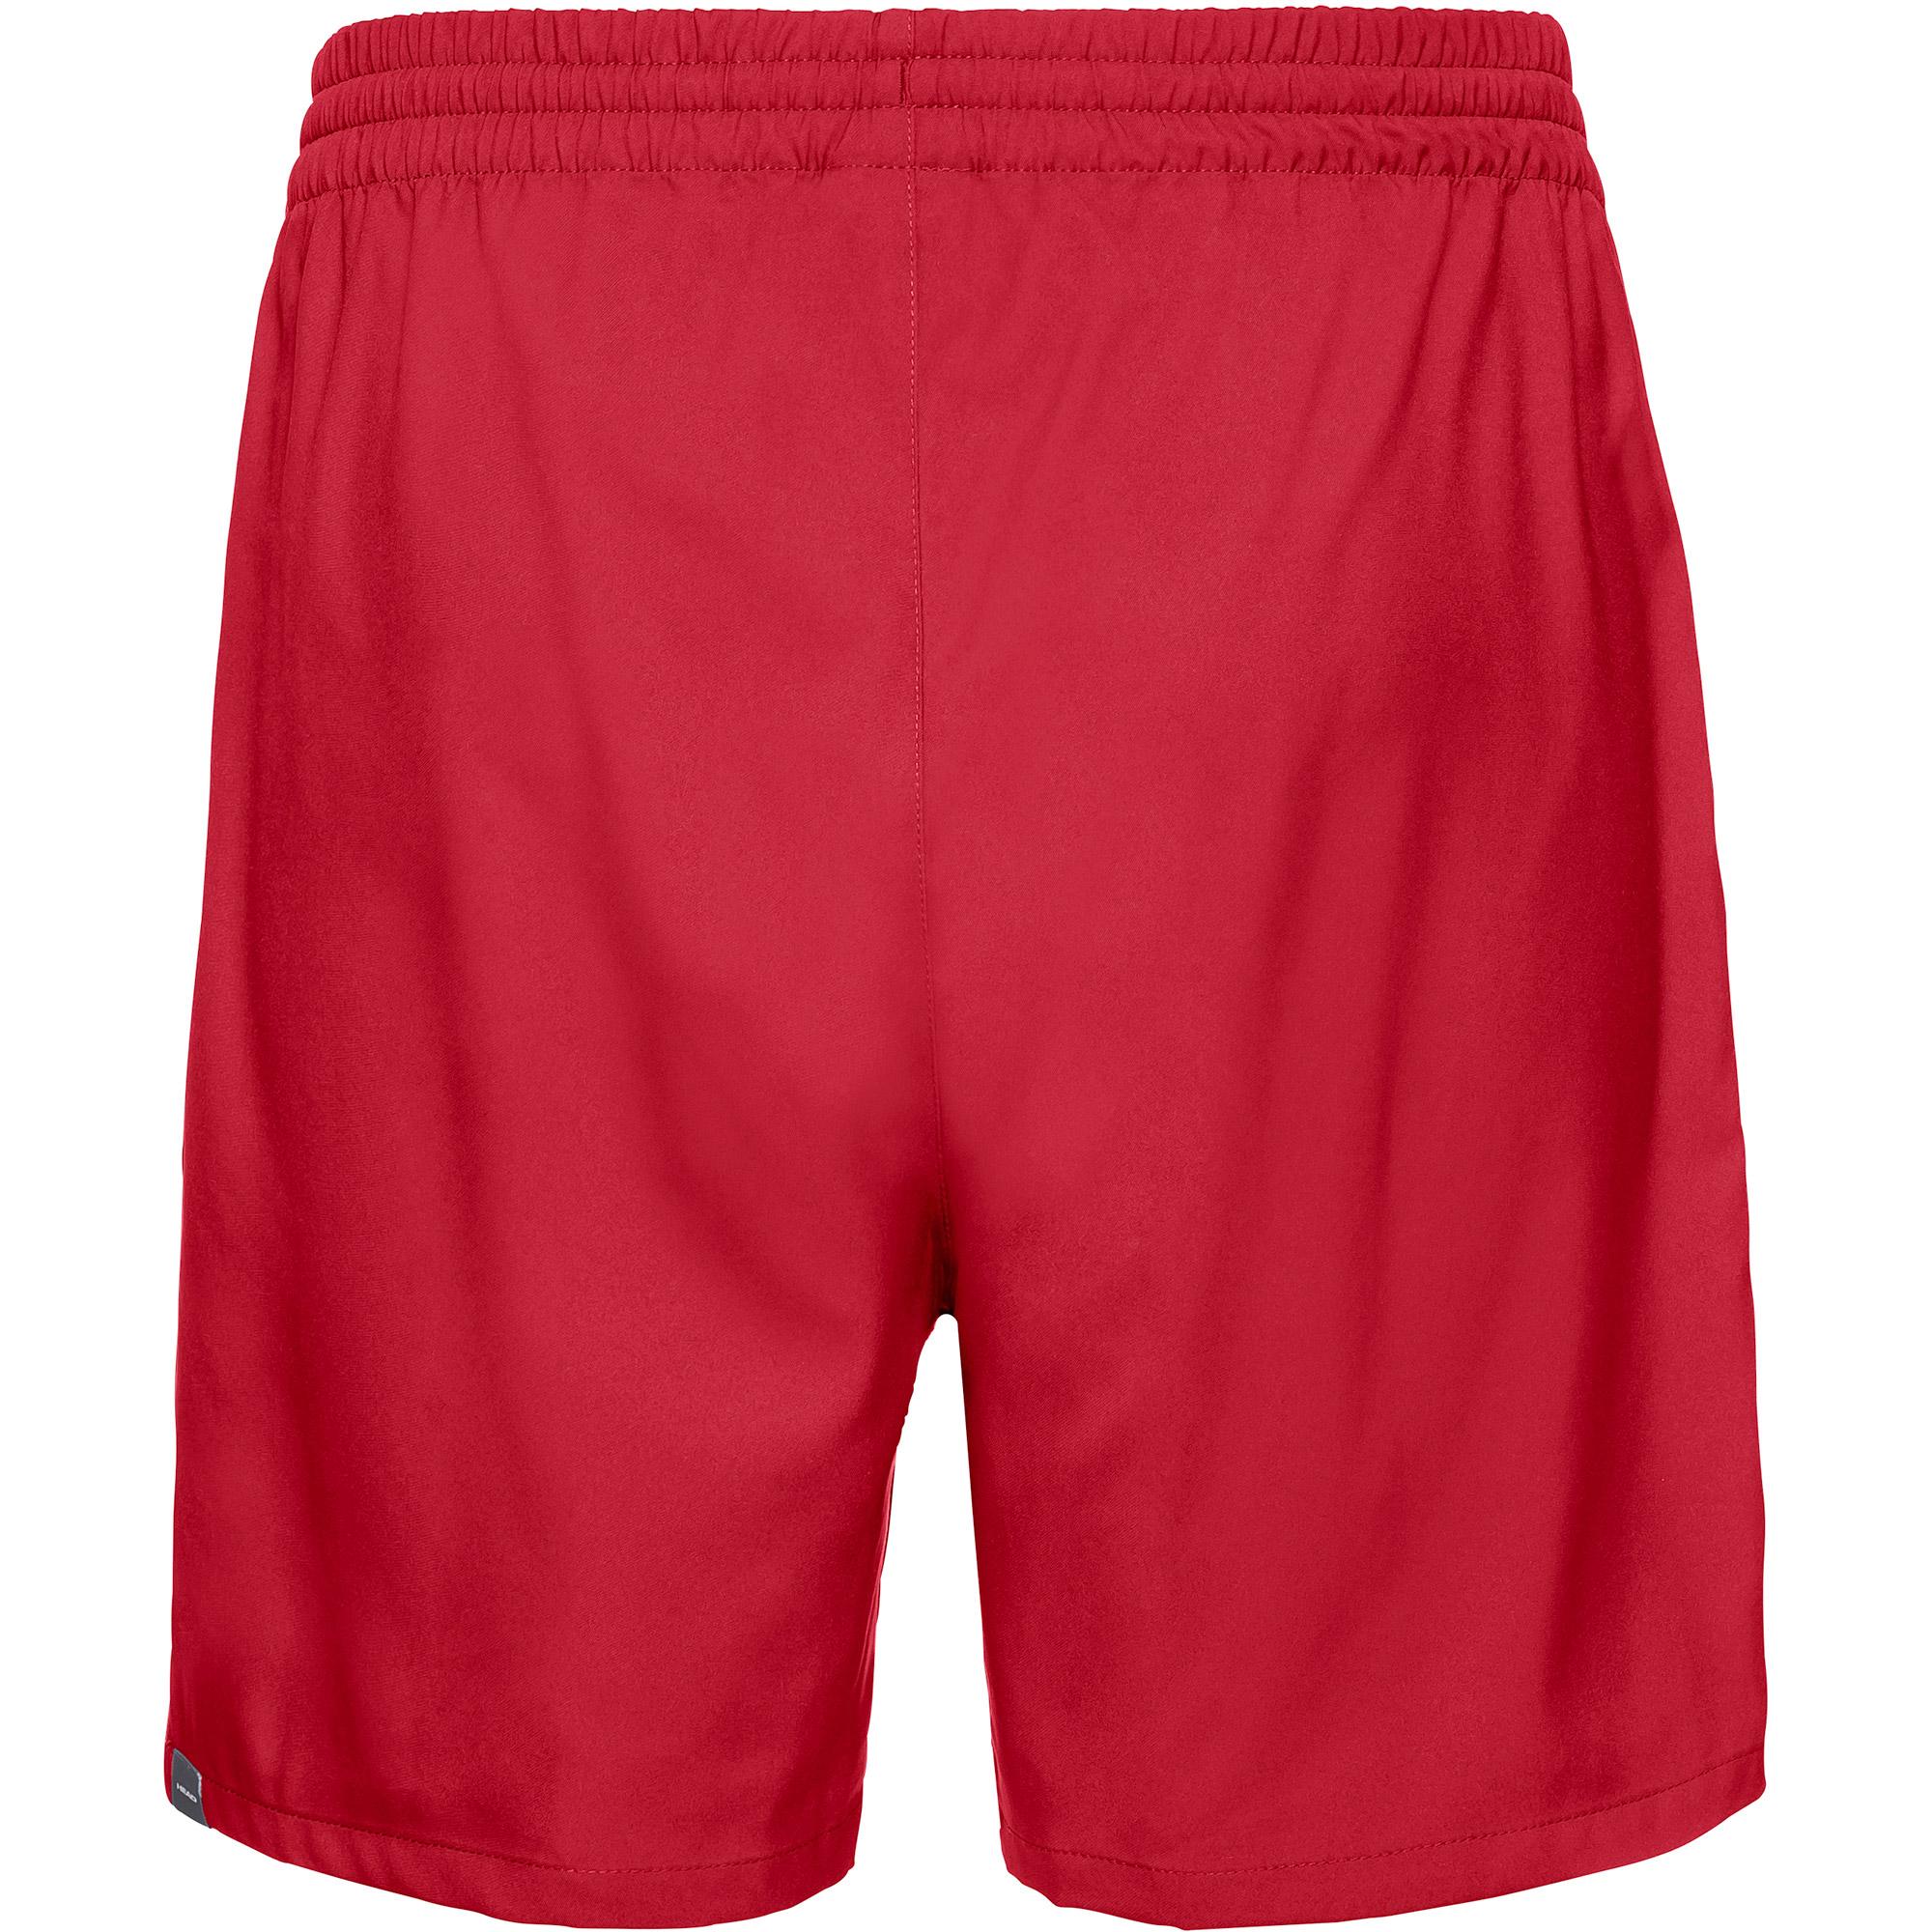 Head Mens Club Shorts - Red - Tennisnuts.com